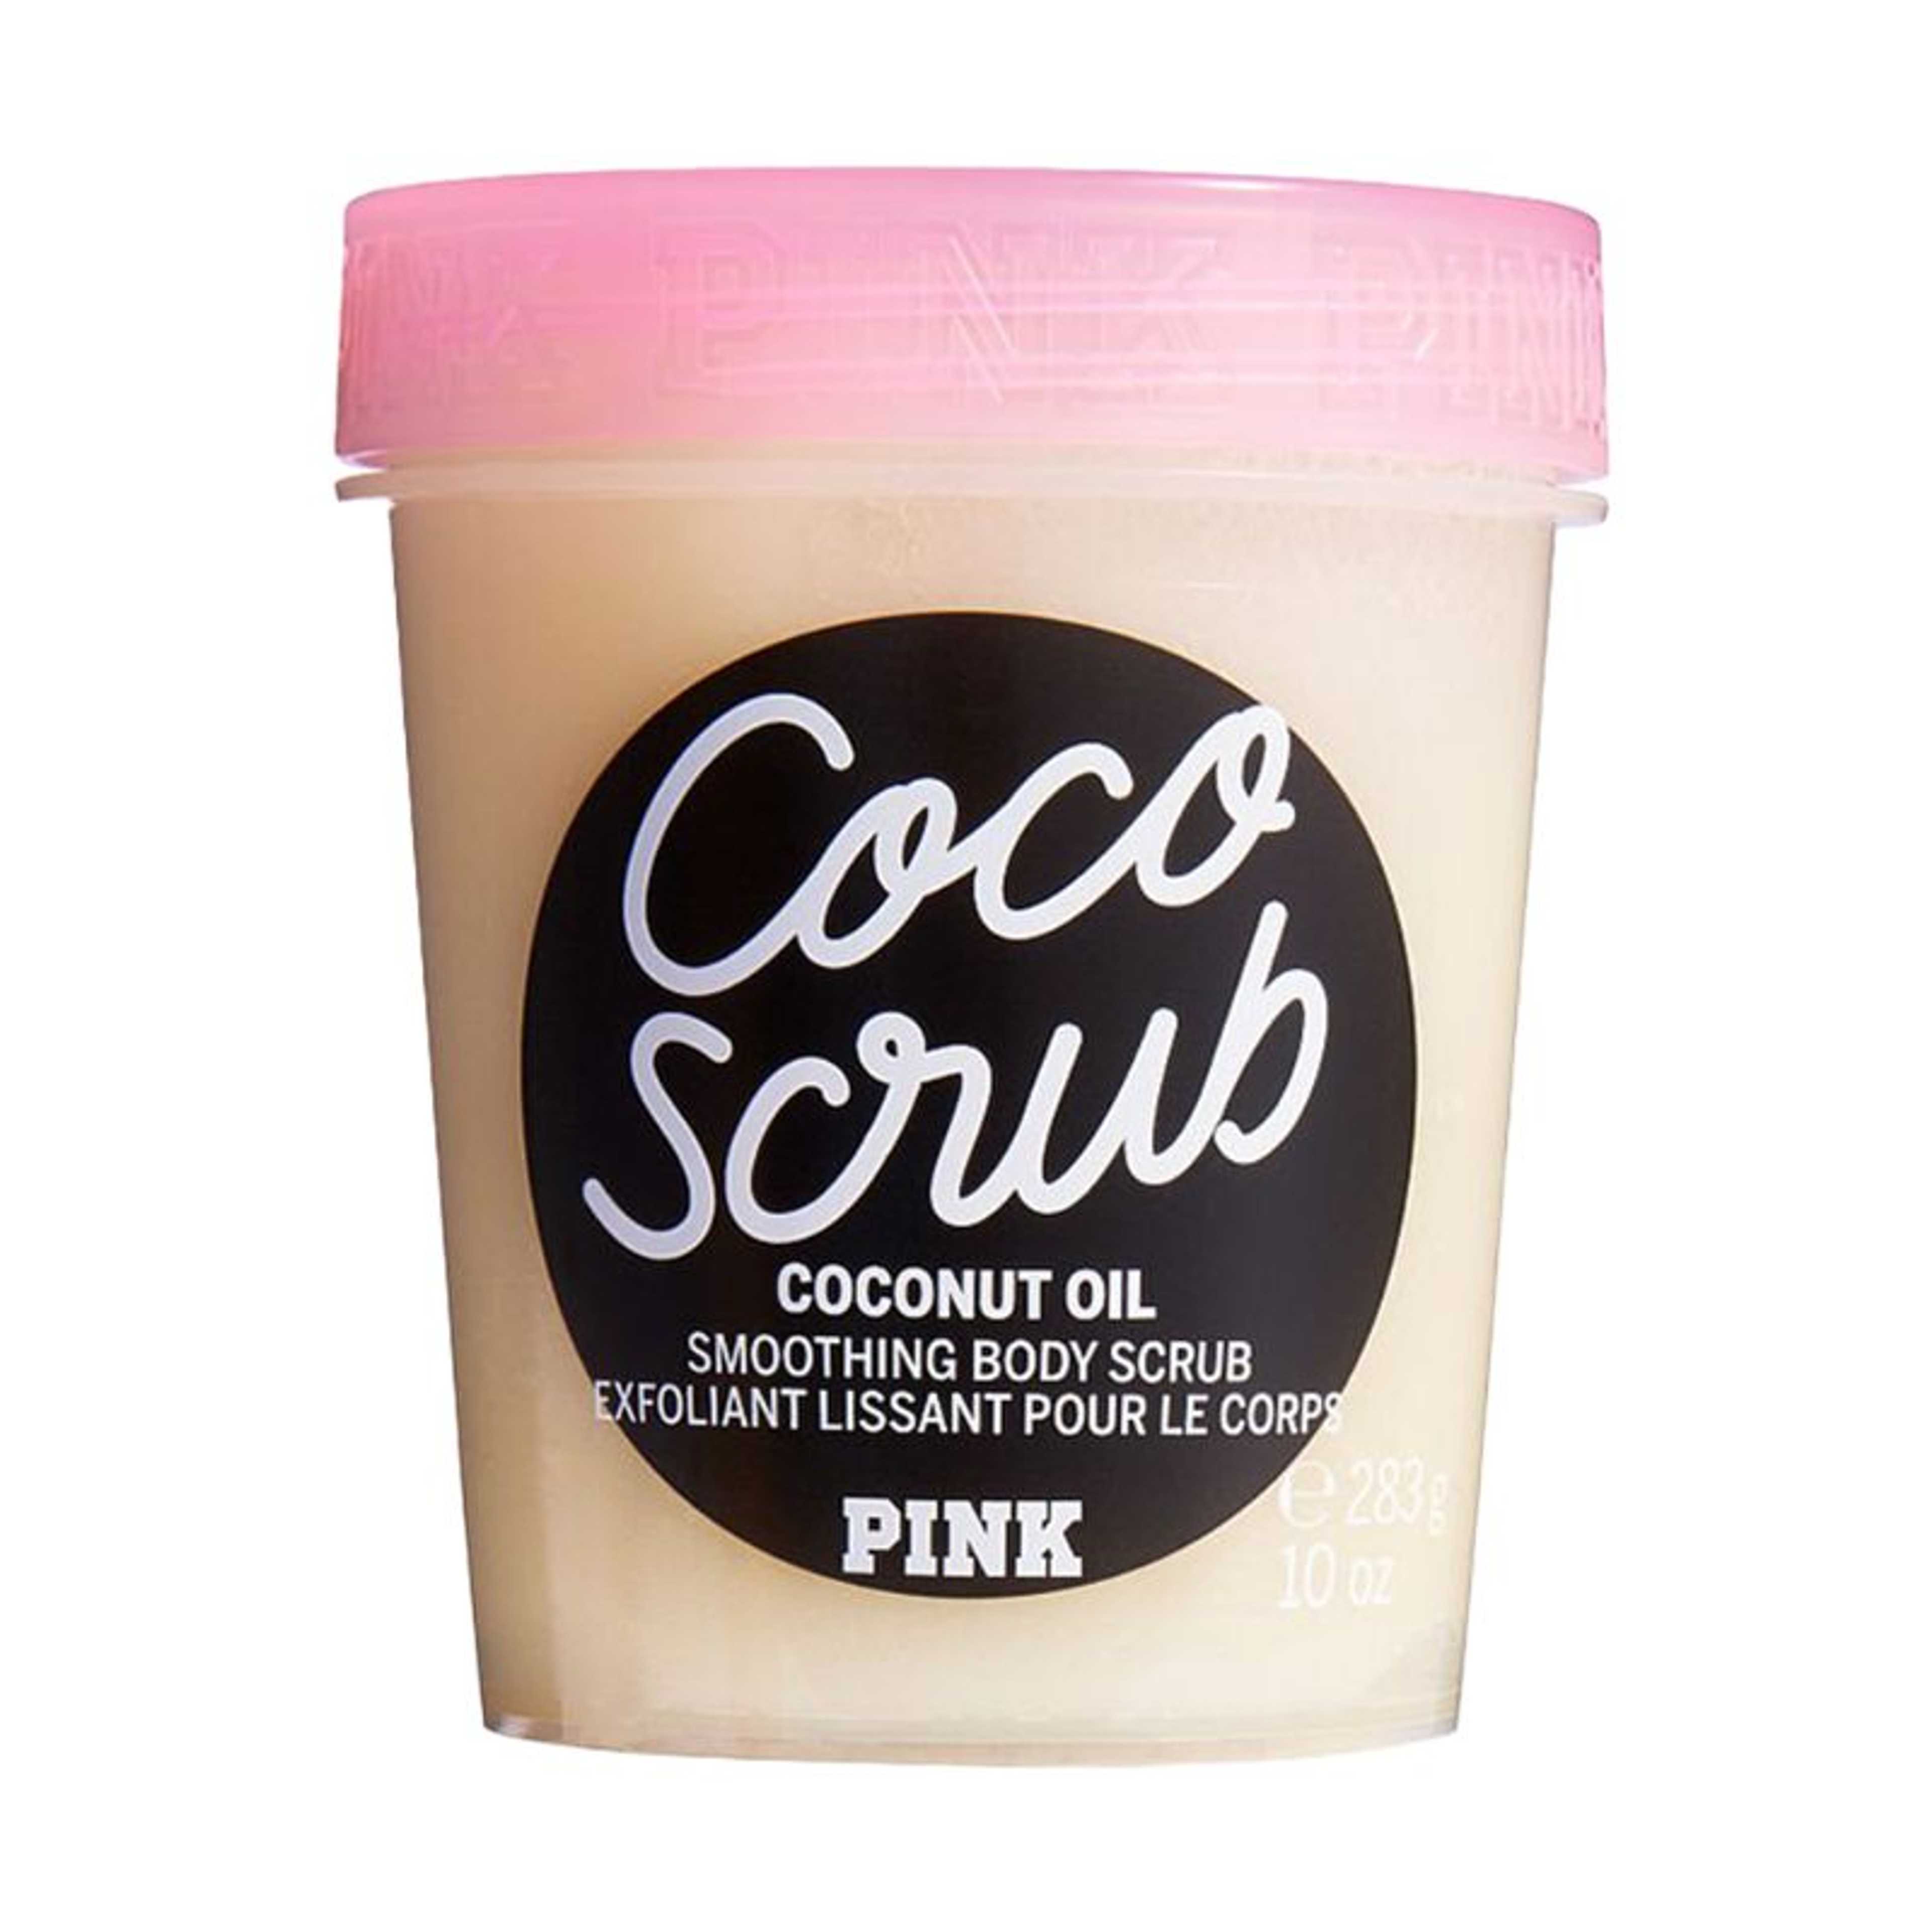 Victoria's Secret Coco Scrub Smoothing Body Scrub with Coconut Oil